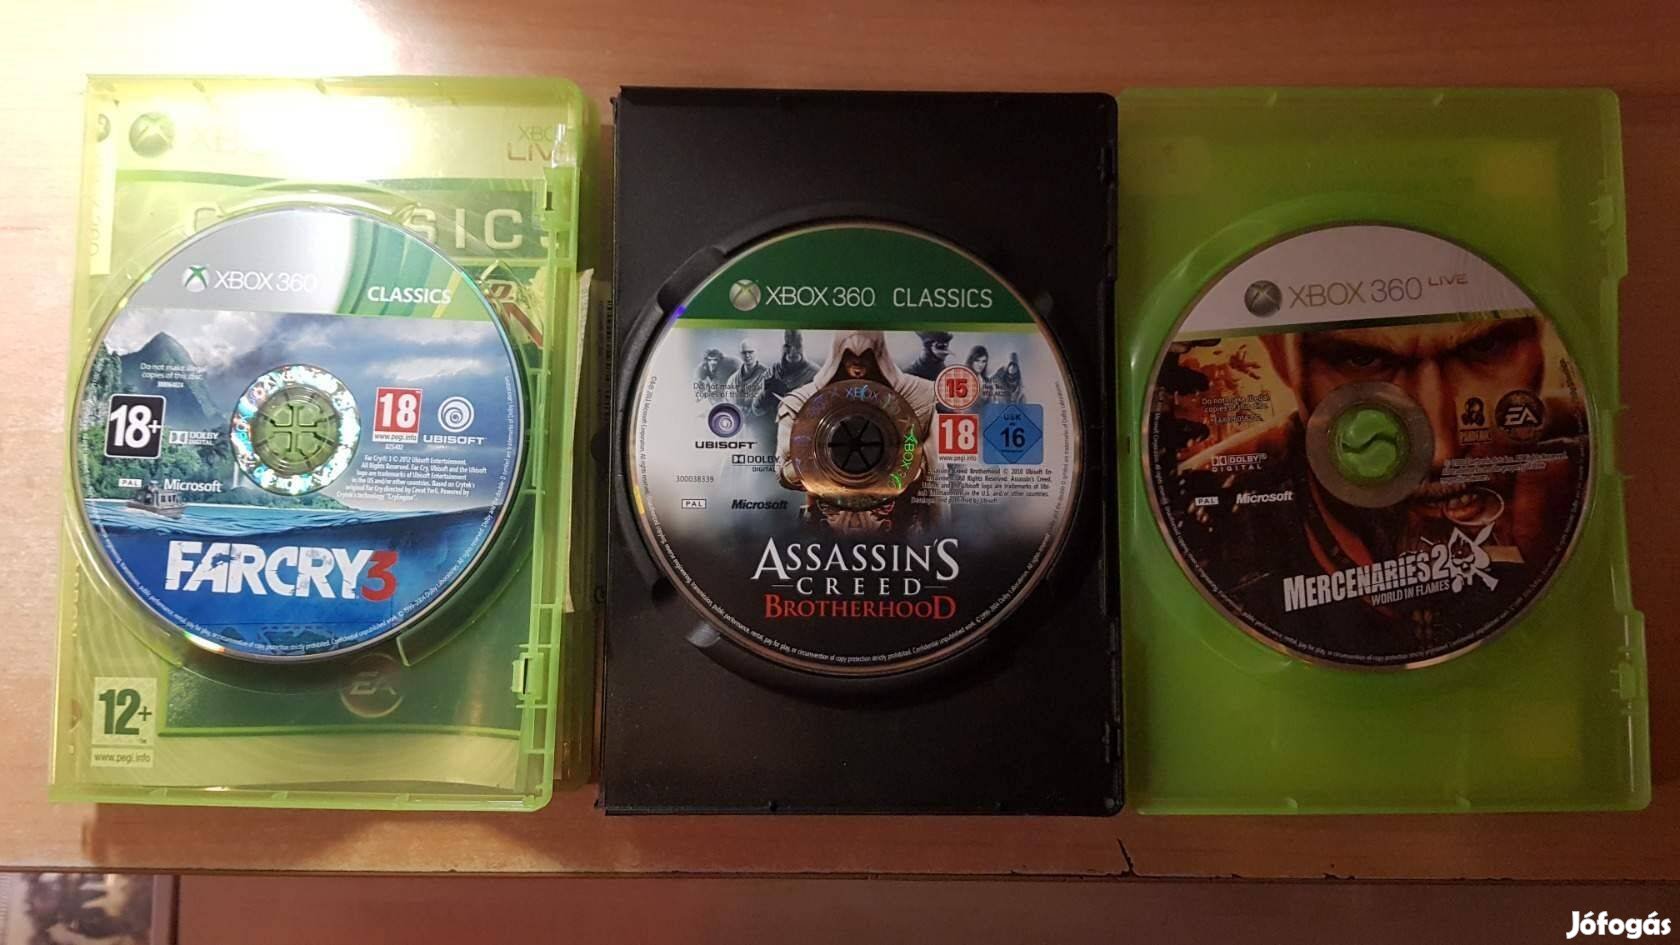 Xbox 360 Assassin's Creed Brotherhood, Mercenaries 2 játékok !